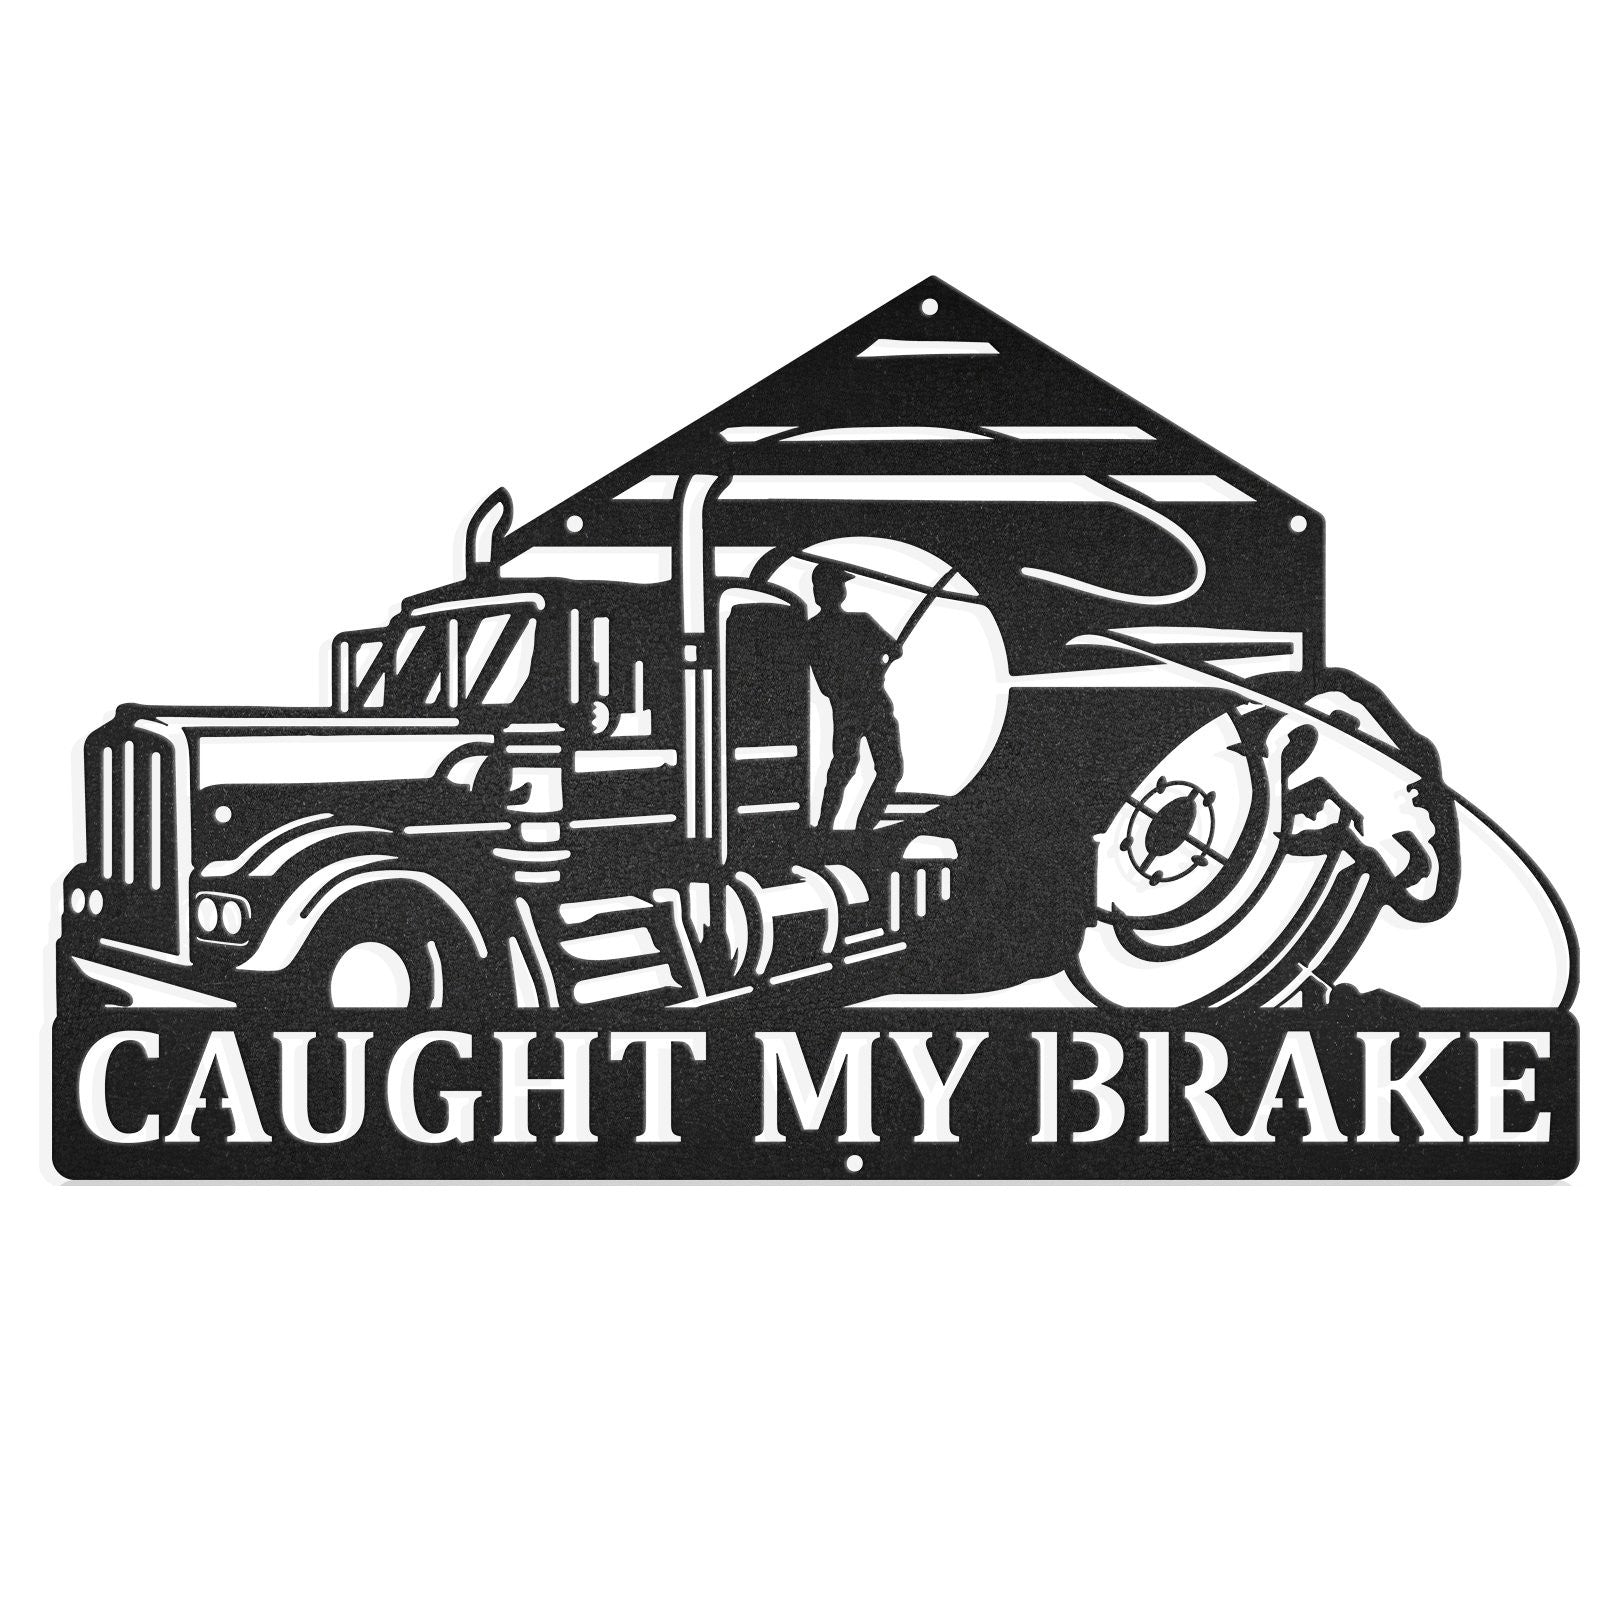 Custom Caught My Brake Trucker Vehicle Metal Sign - Metal Decor Wall Art - Heavy Equipment Operator Gifts